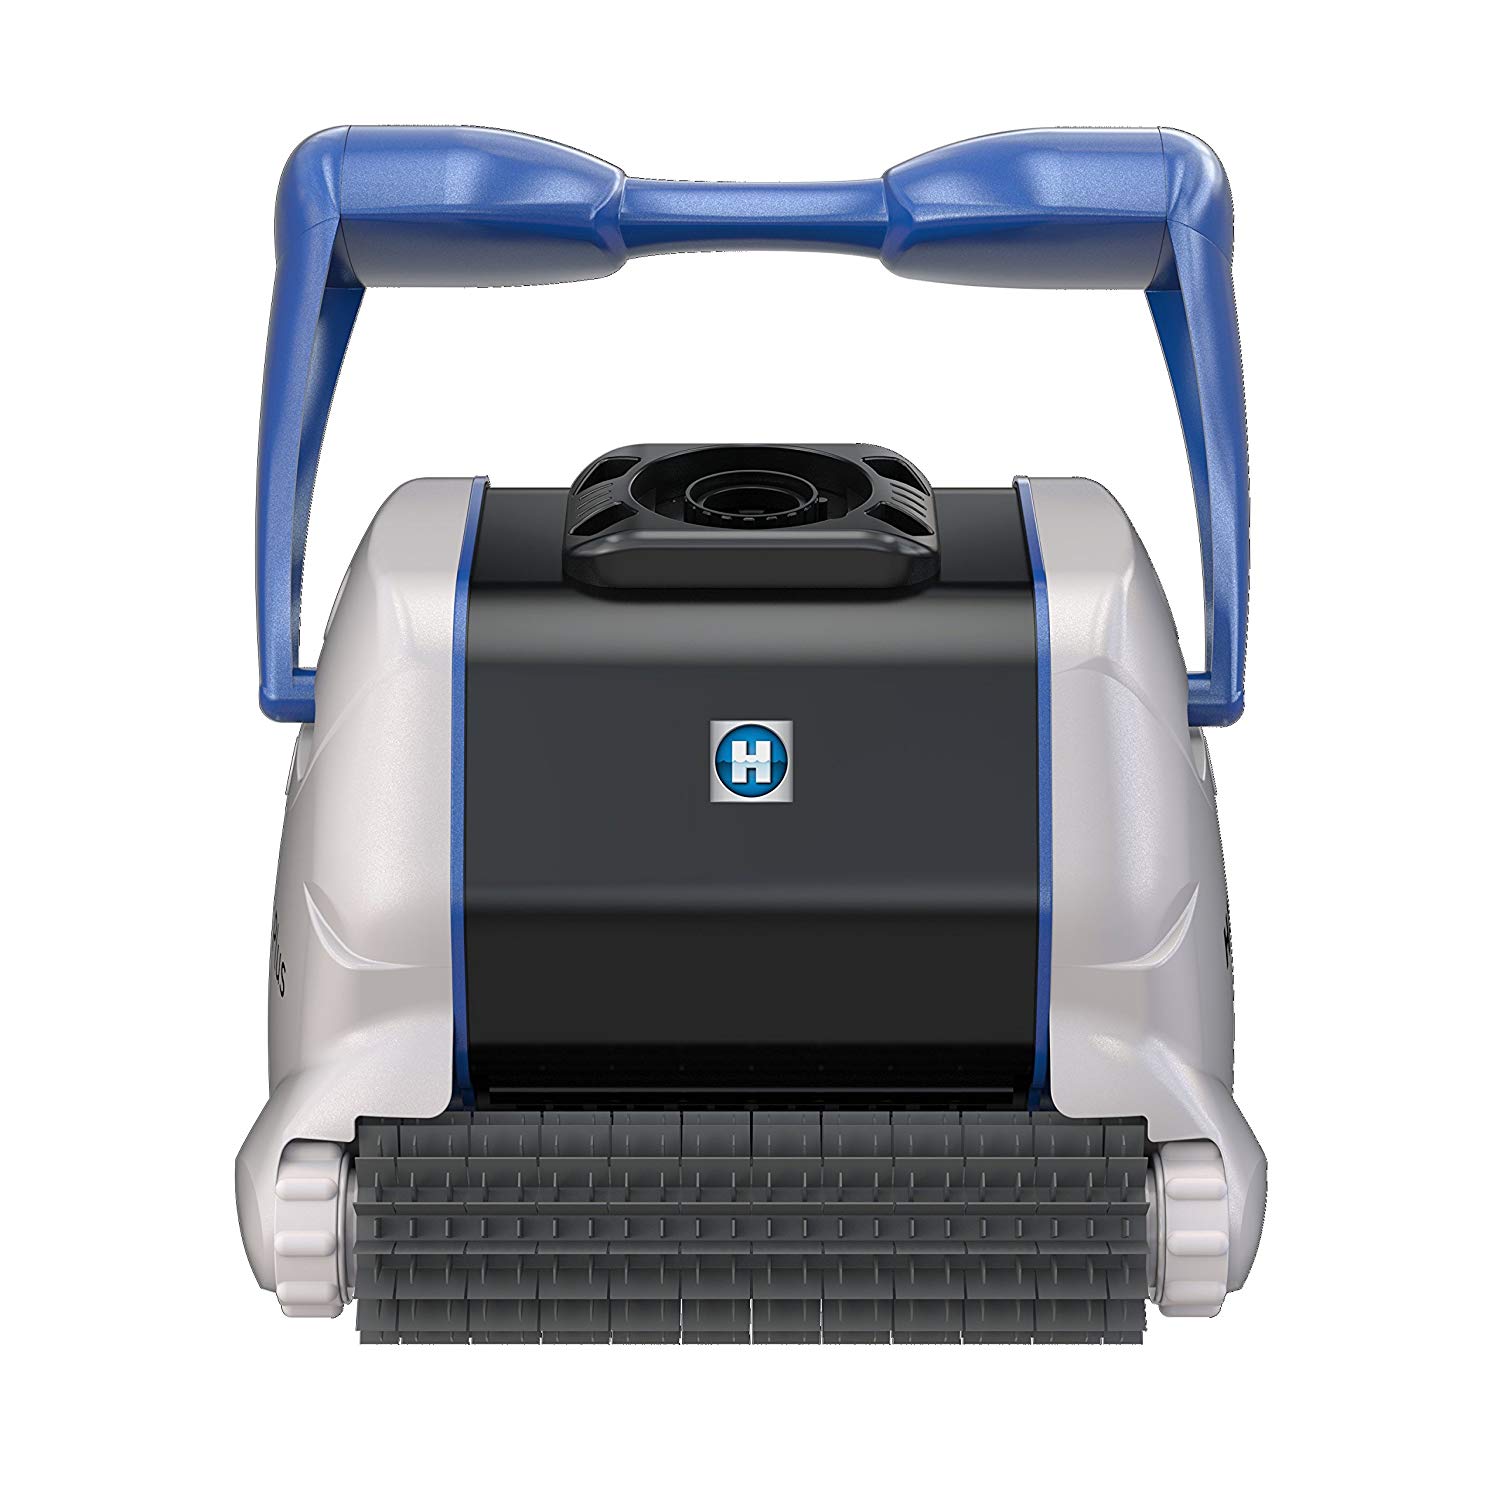 Hayward RC9990CUB TigerShark Robotic Pool Vacuum (Automatic Pool Cleaner)